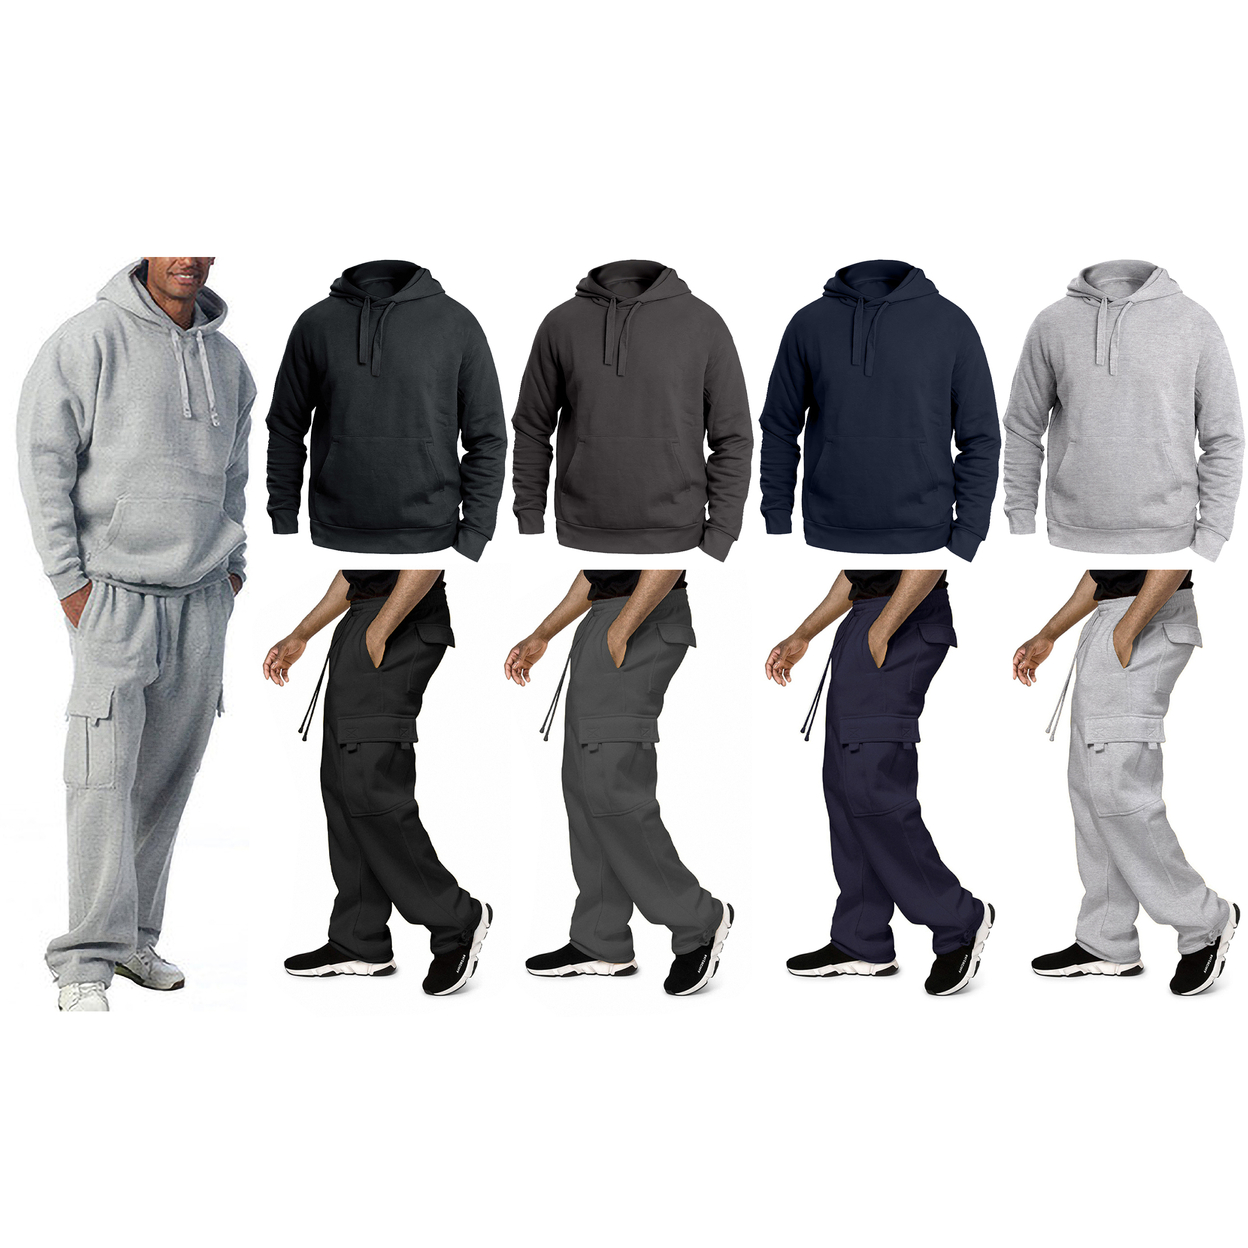 2-Pack: Men's Big & Tall Winter Warm Cozy Athletic Fleece Lined Multi-Pocket Cargo Sweatsuit - Black, X-large